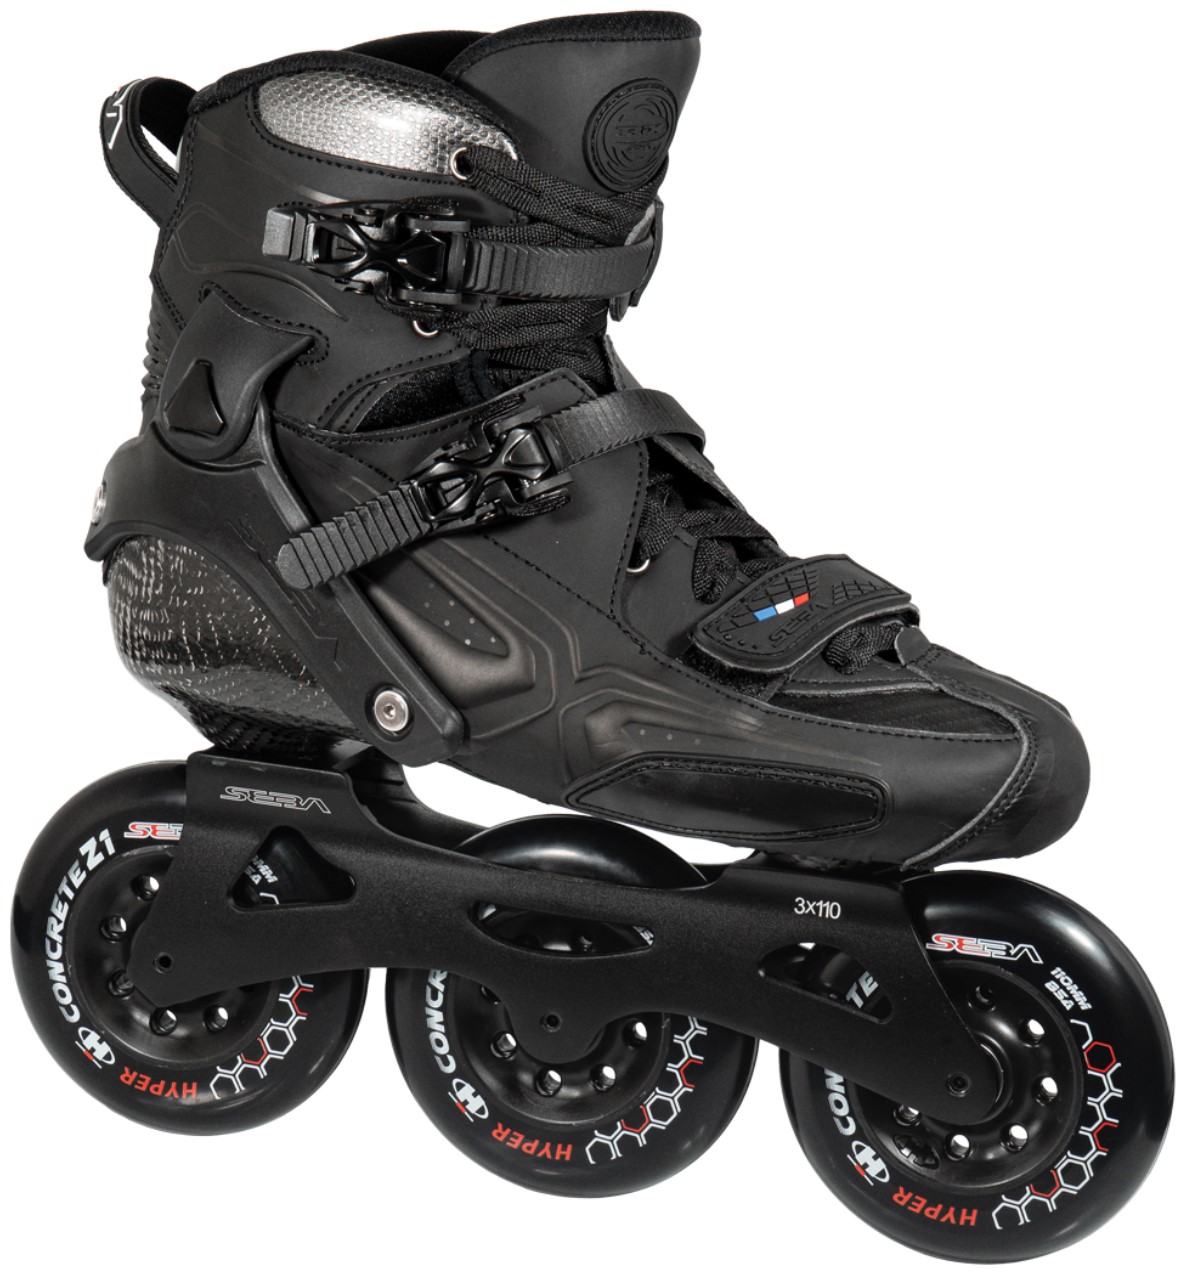 black Seba Trix 310 skate with 3 wheels of 110 mm diameter